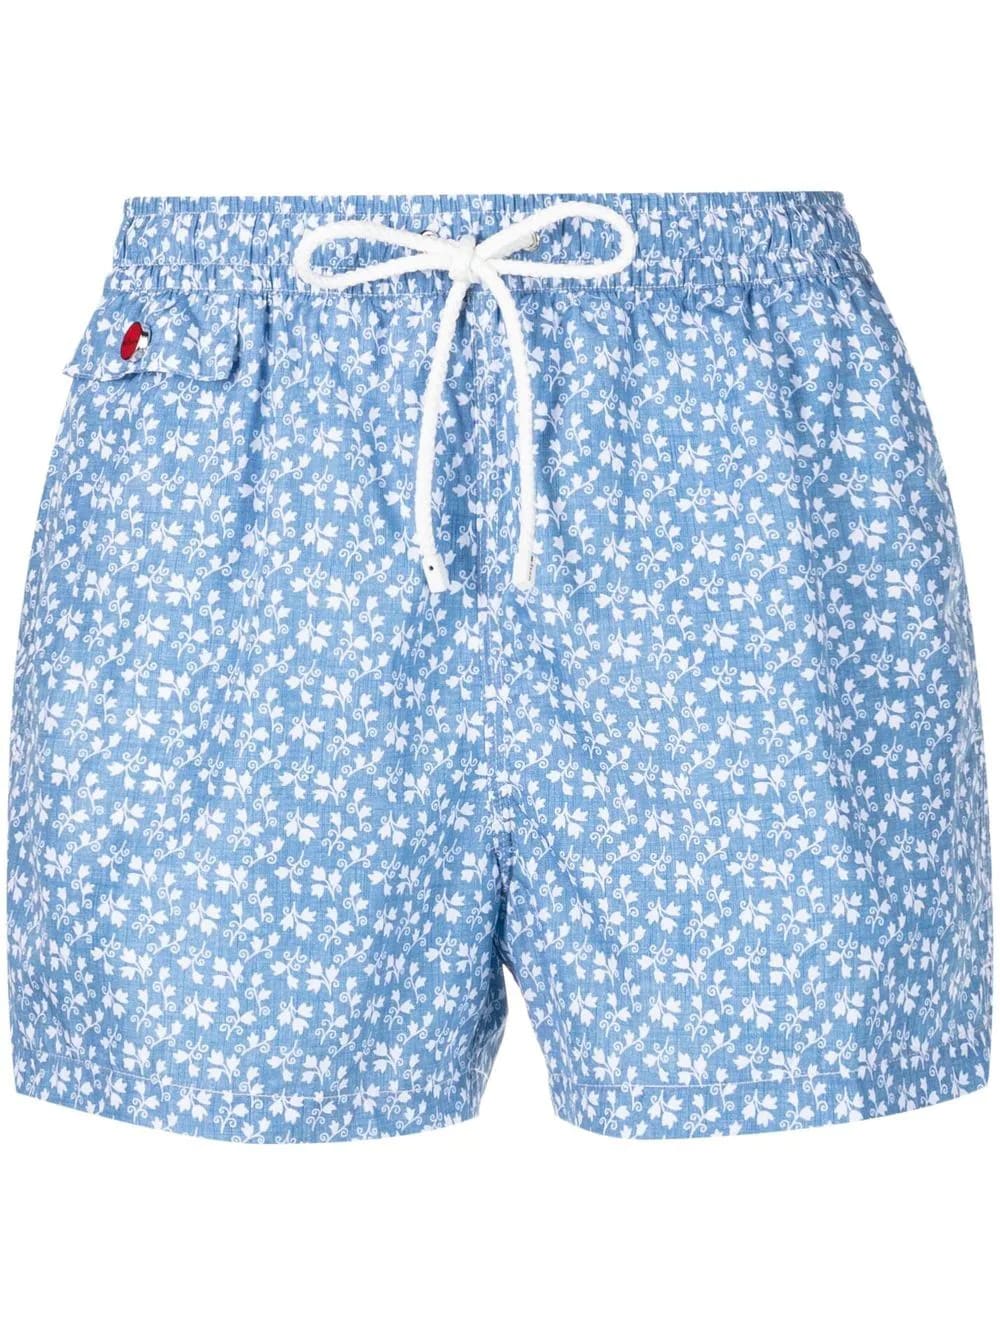 Kiton Light Blue Swim Shorts With White Micro Floral Print